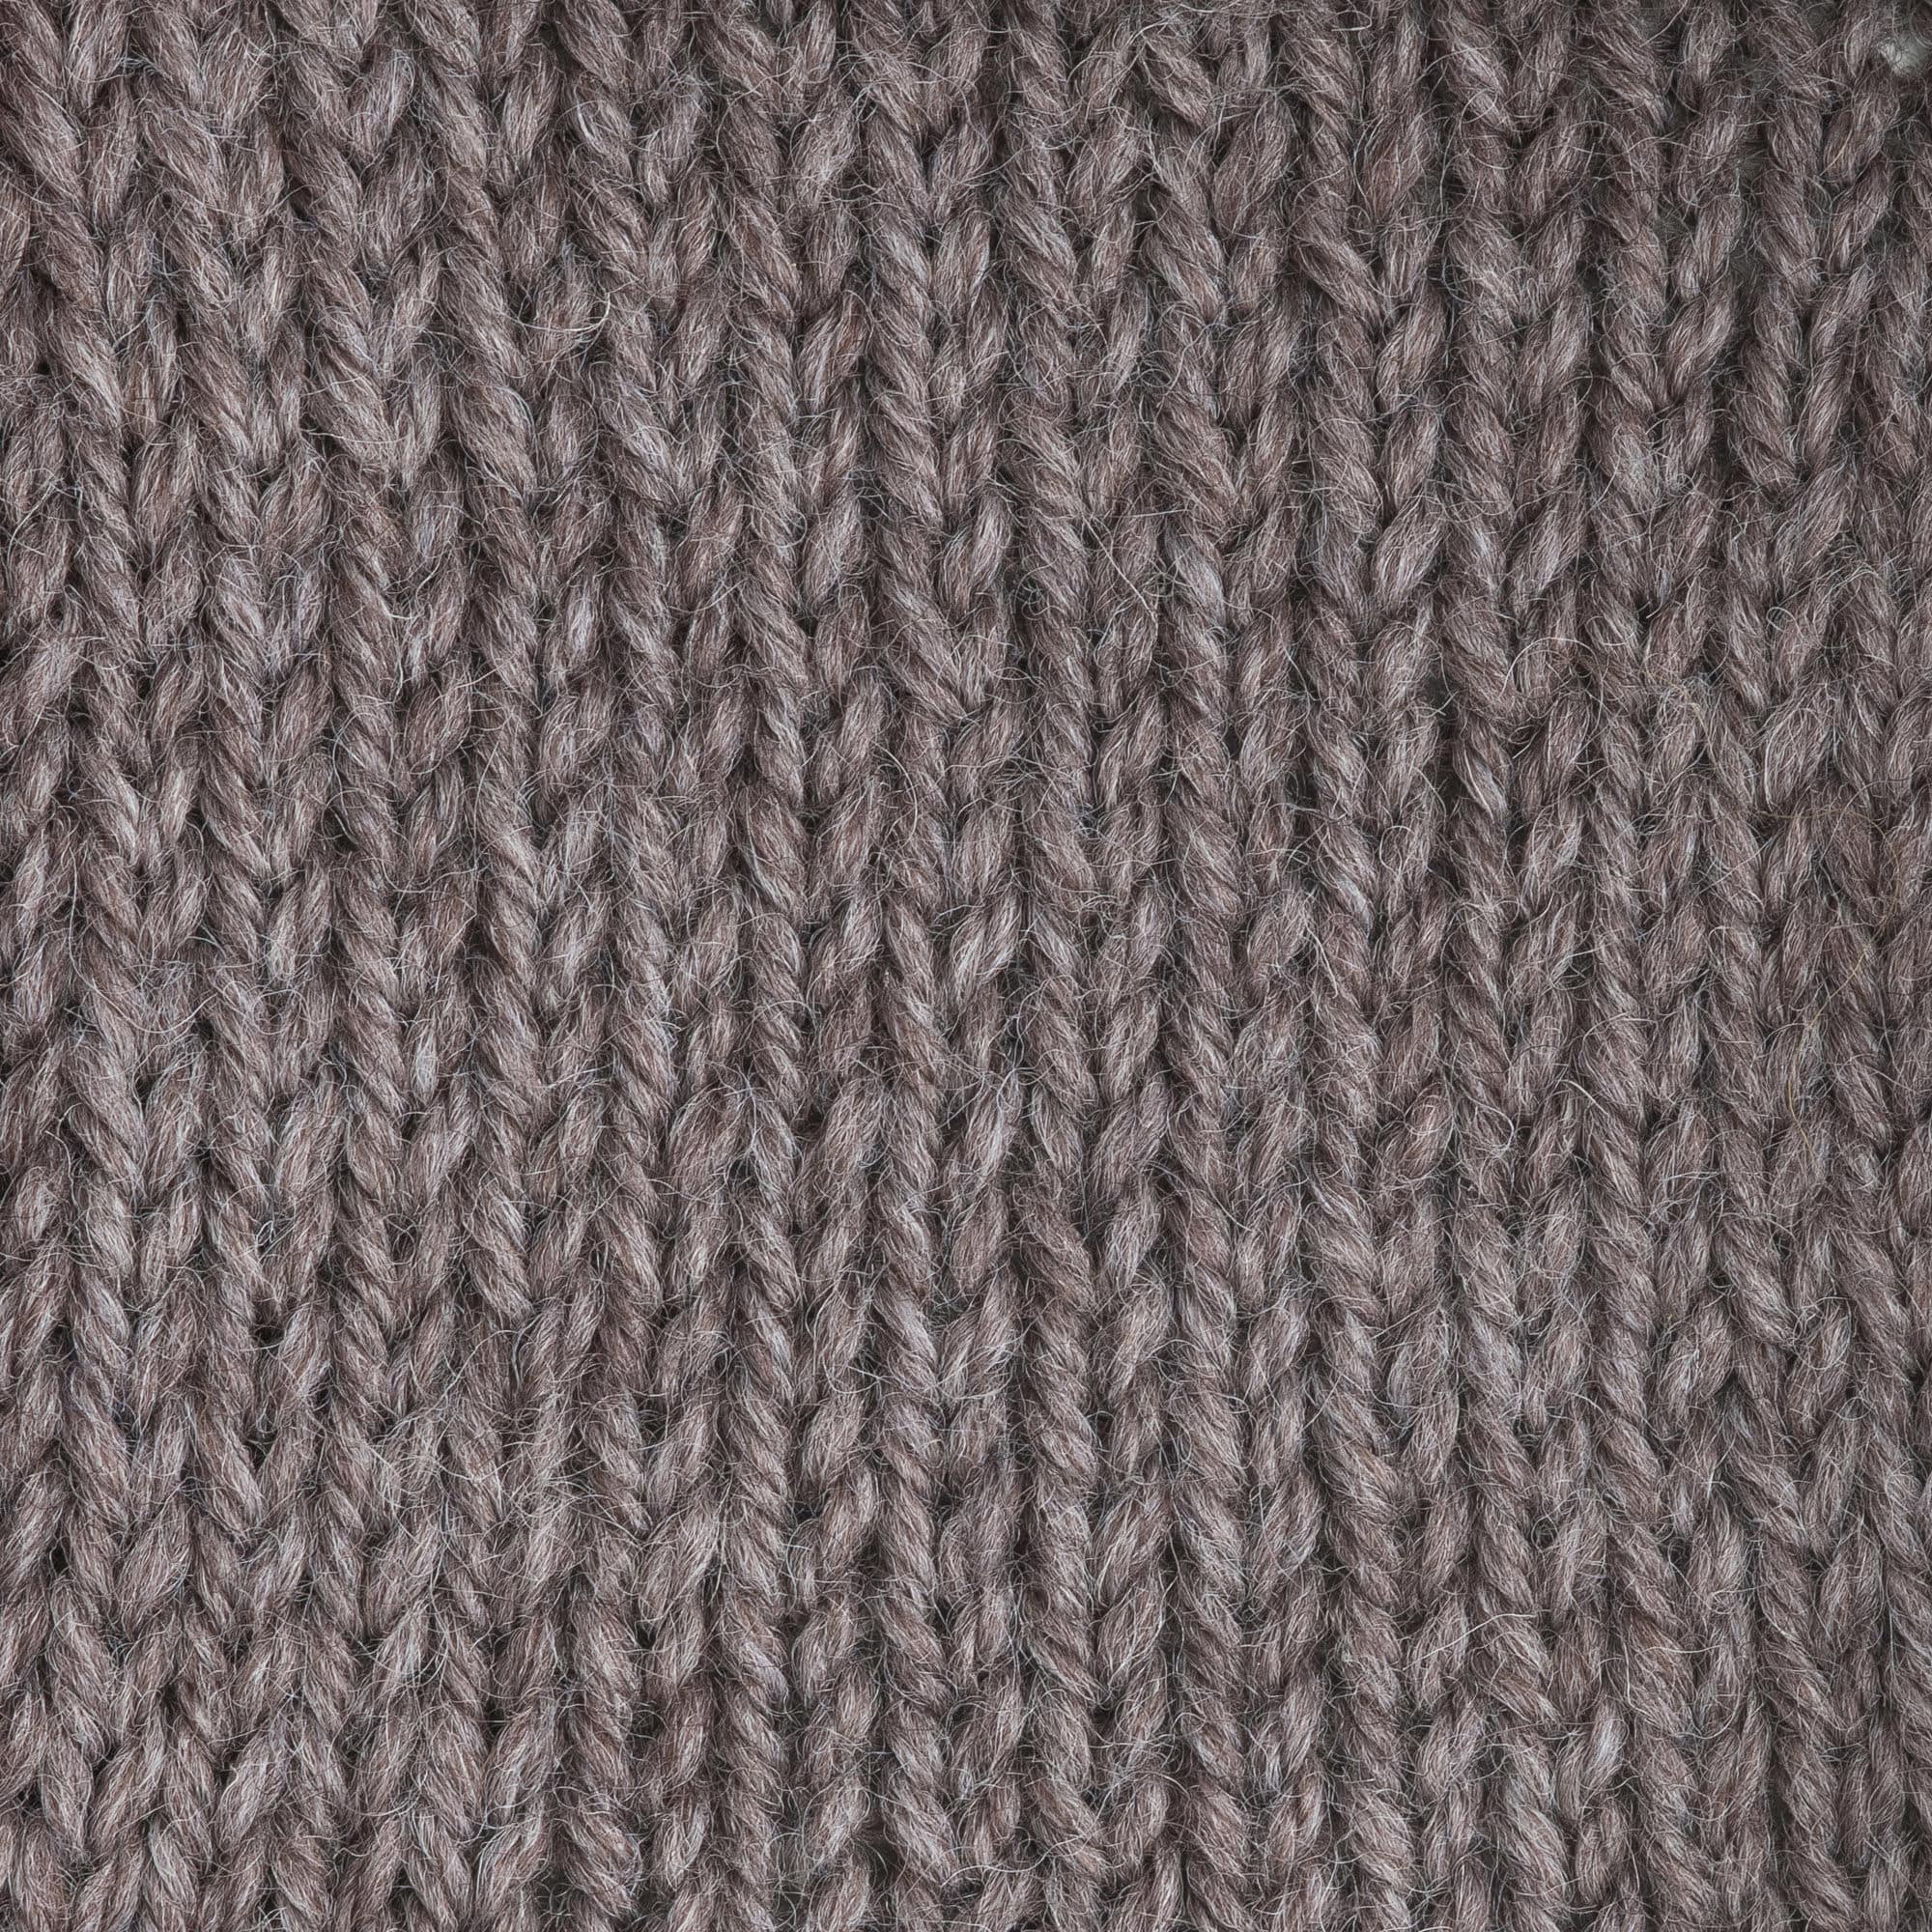 Patons&#xAE; Classic Wool Worsted&#x2122; Yarn